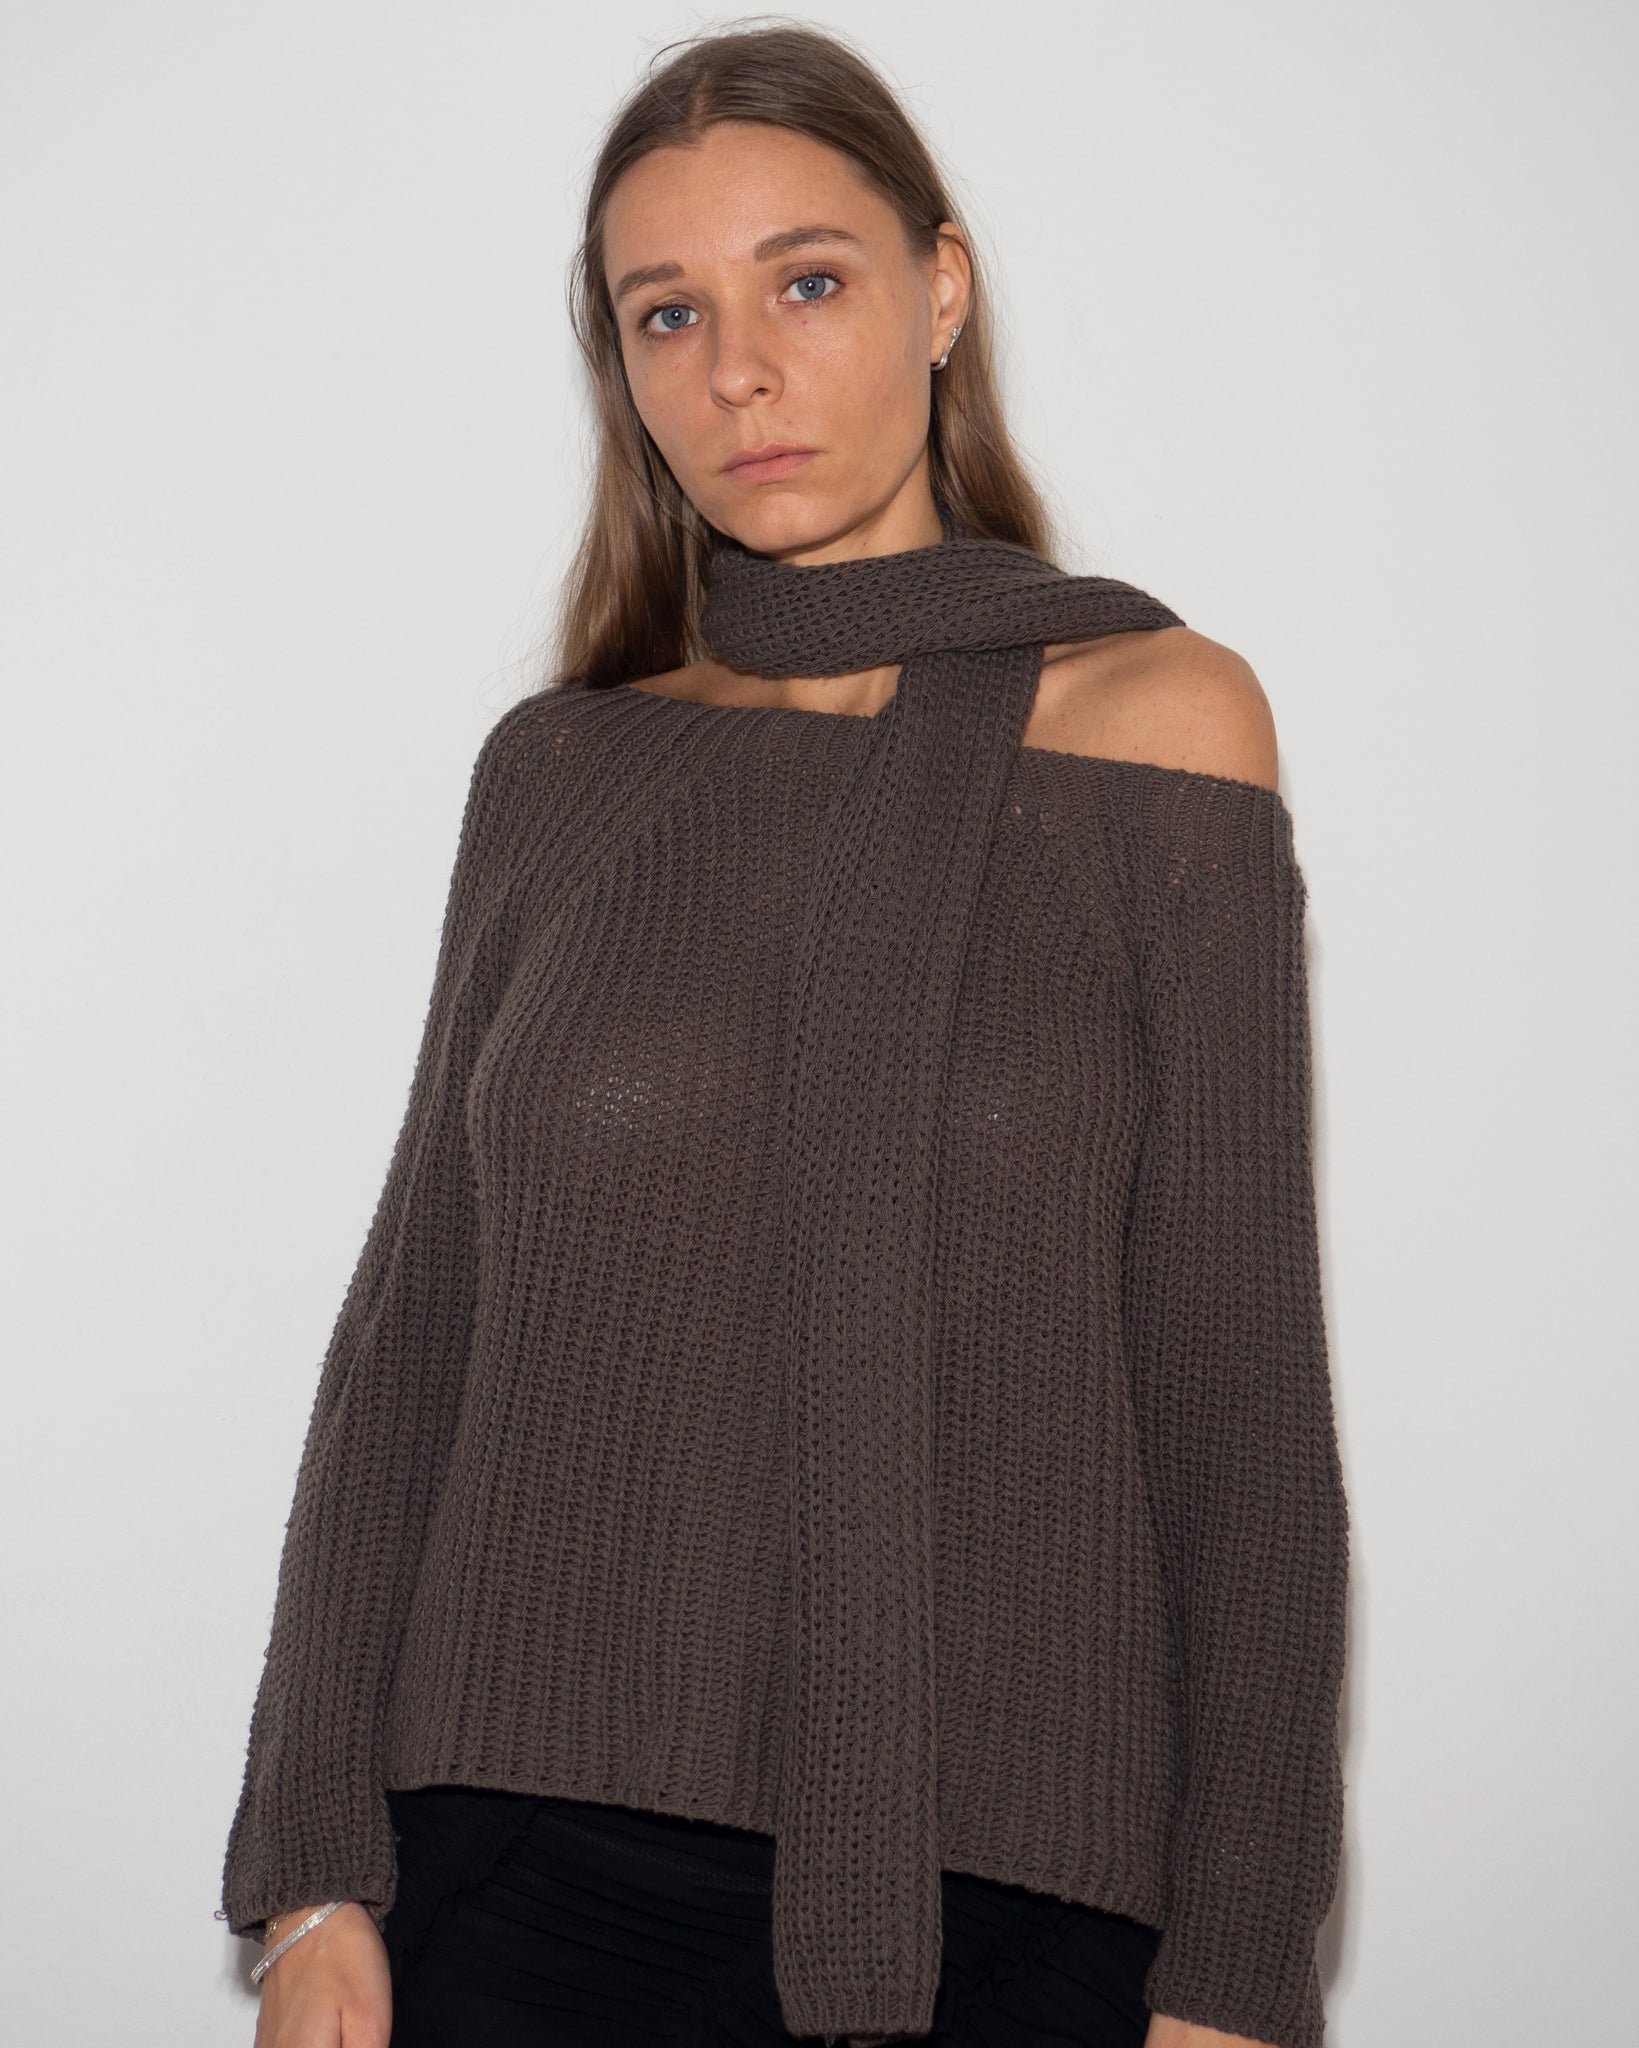 Sweater/Scarf Set